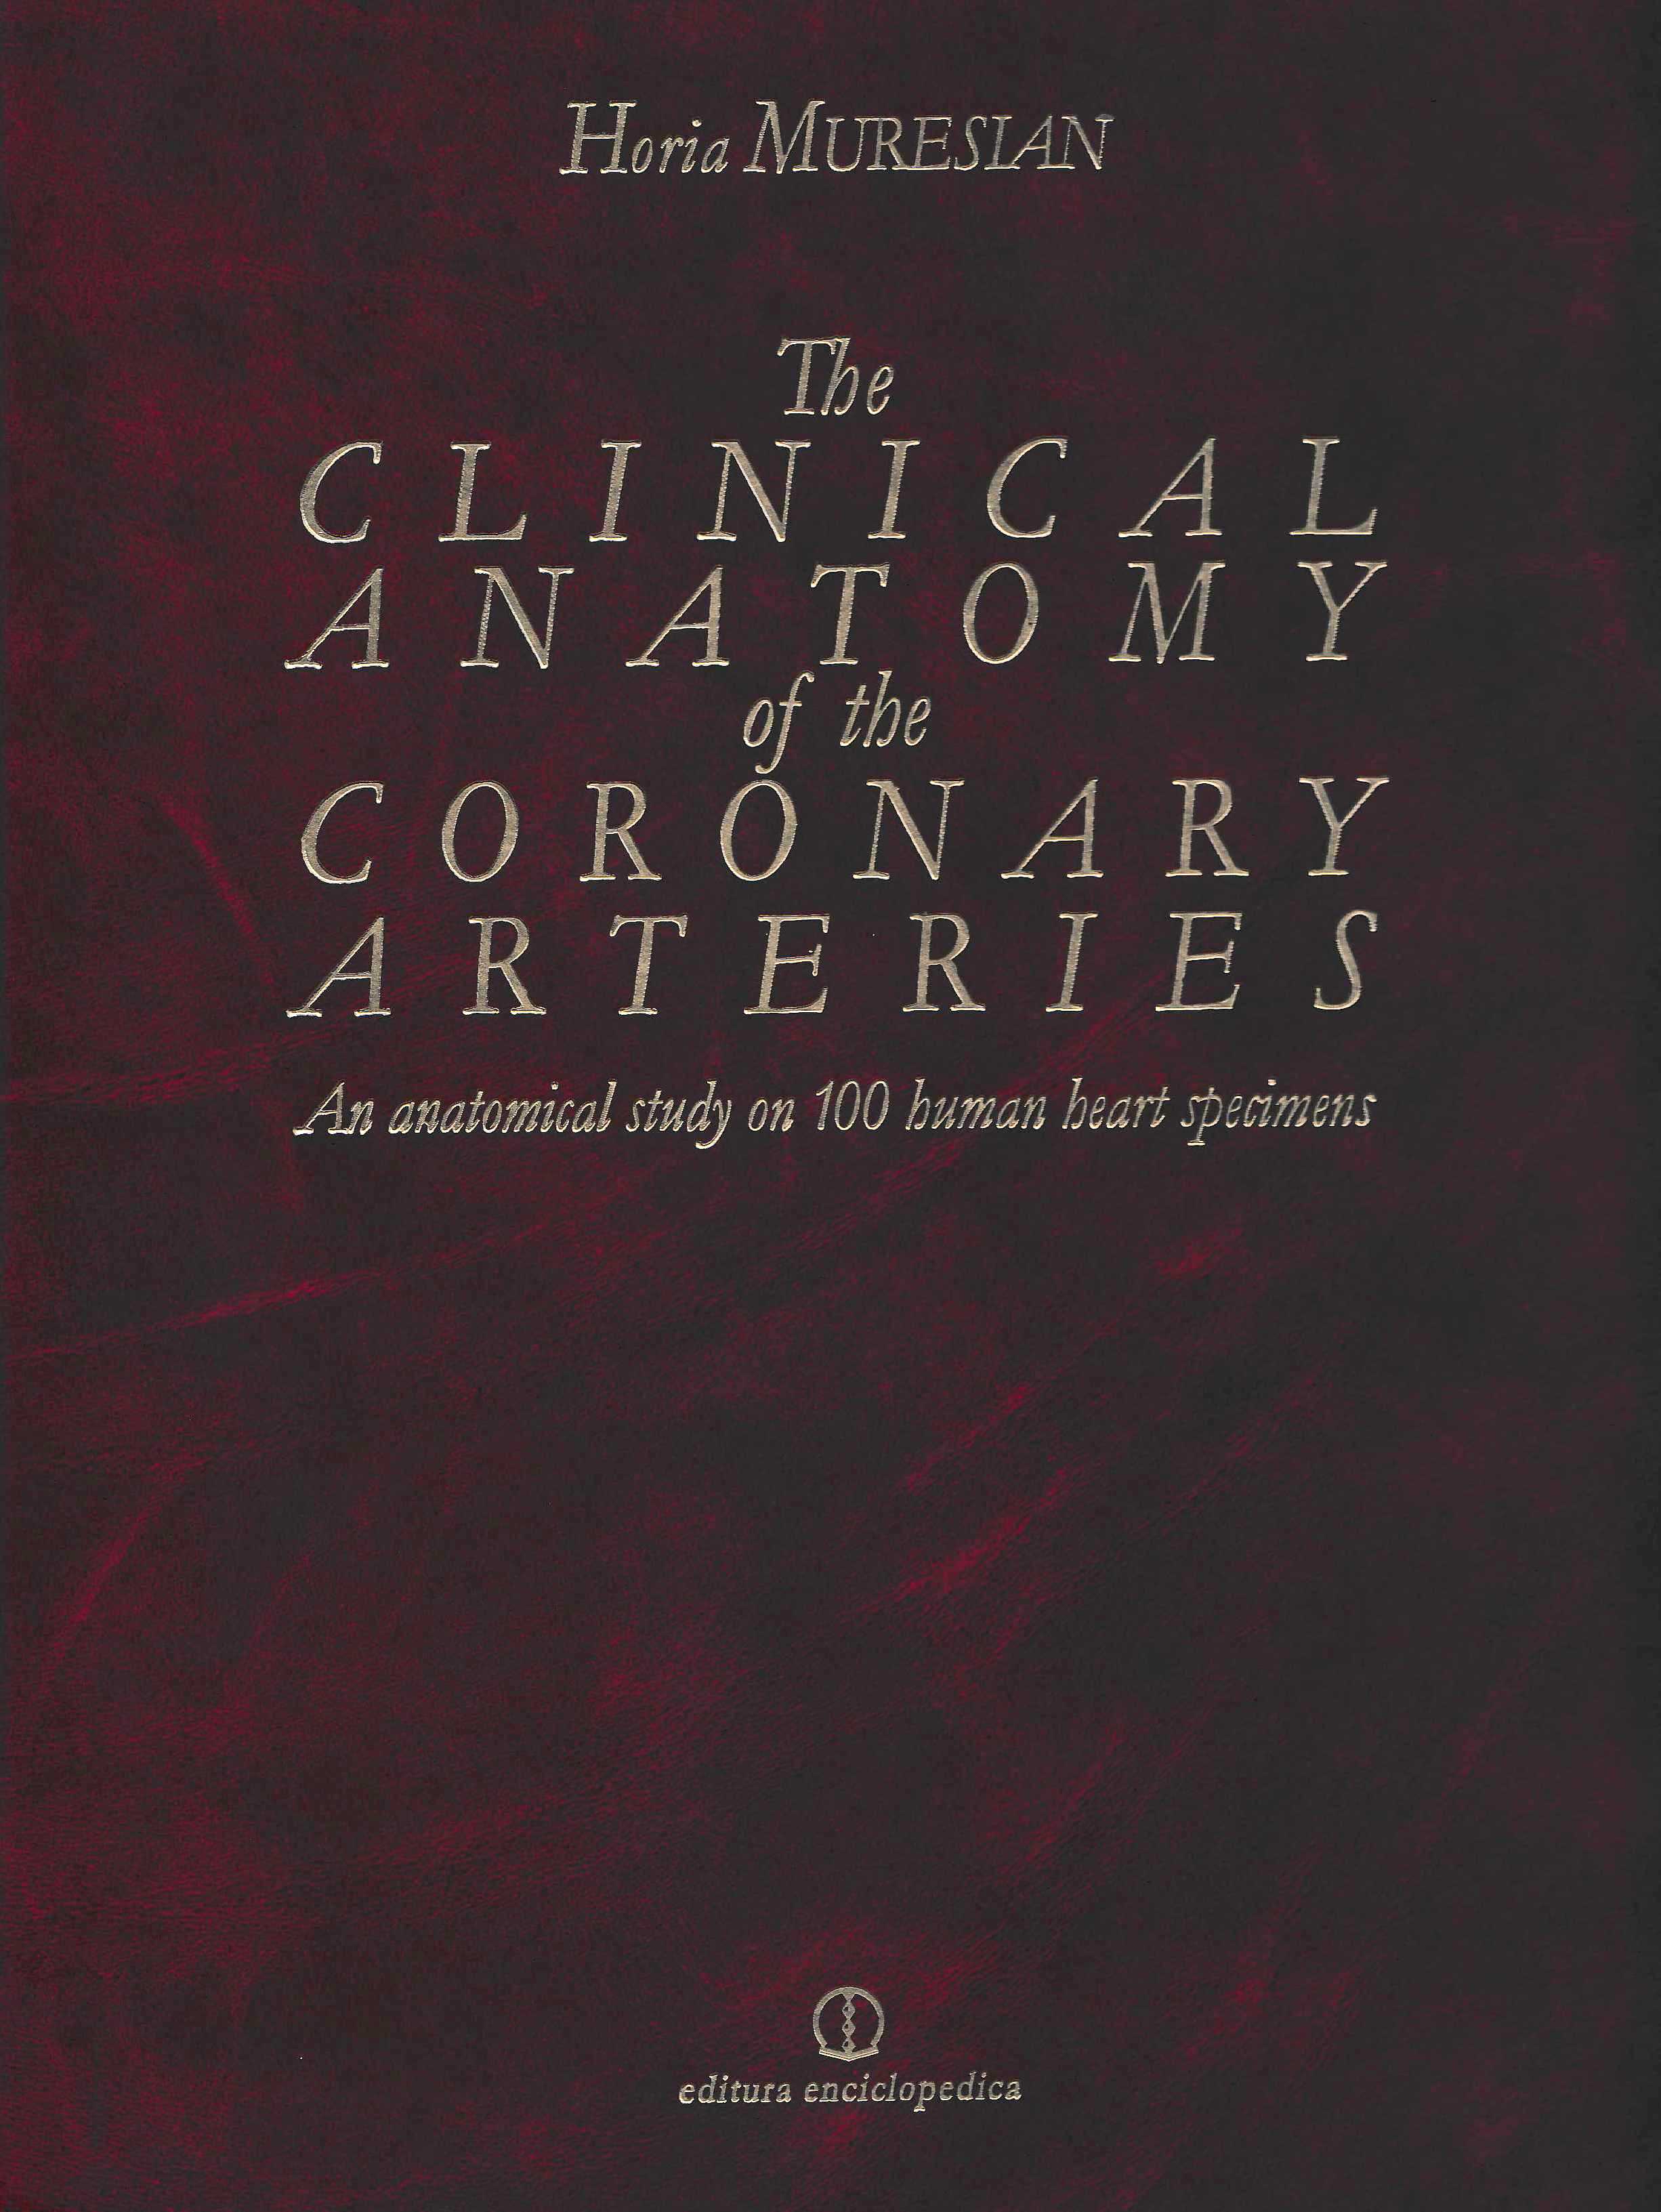 The clinical anatomy of the coronary arteries - Horia Muresian